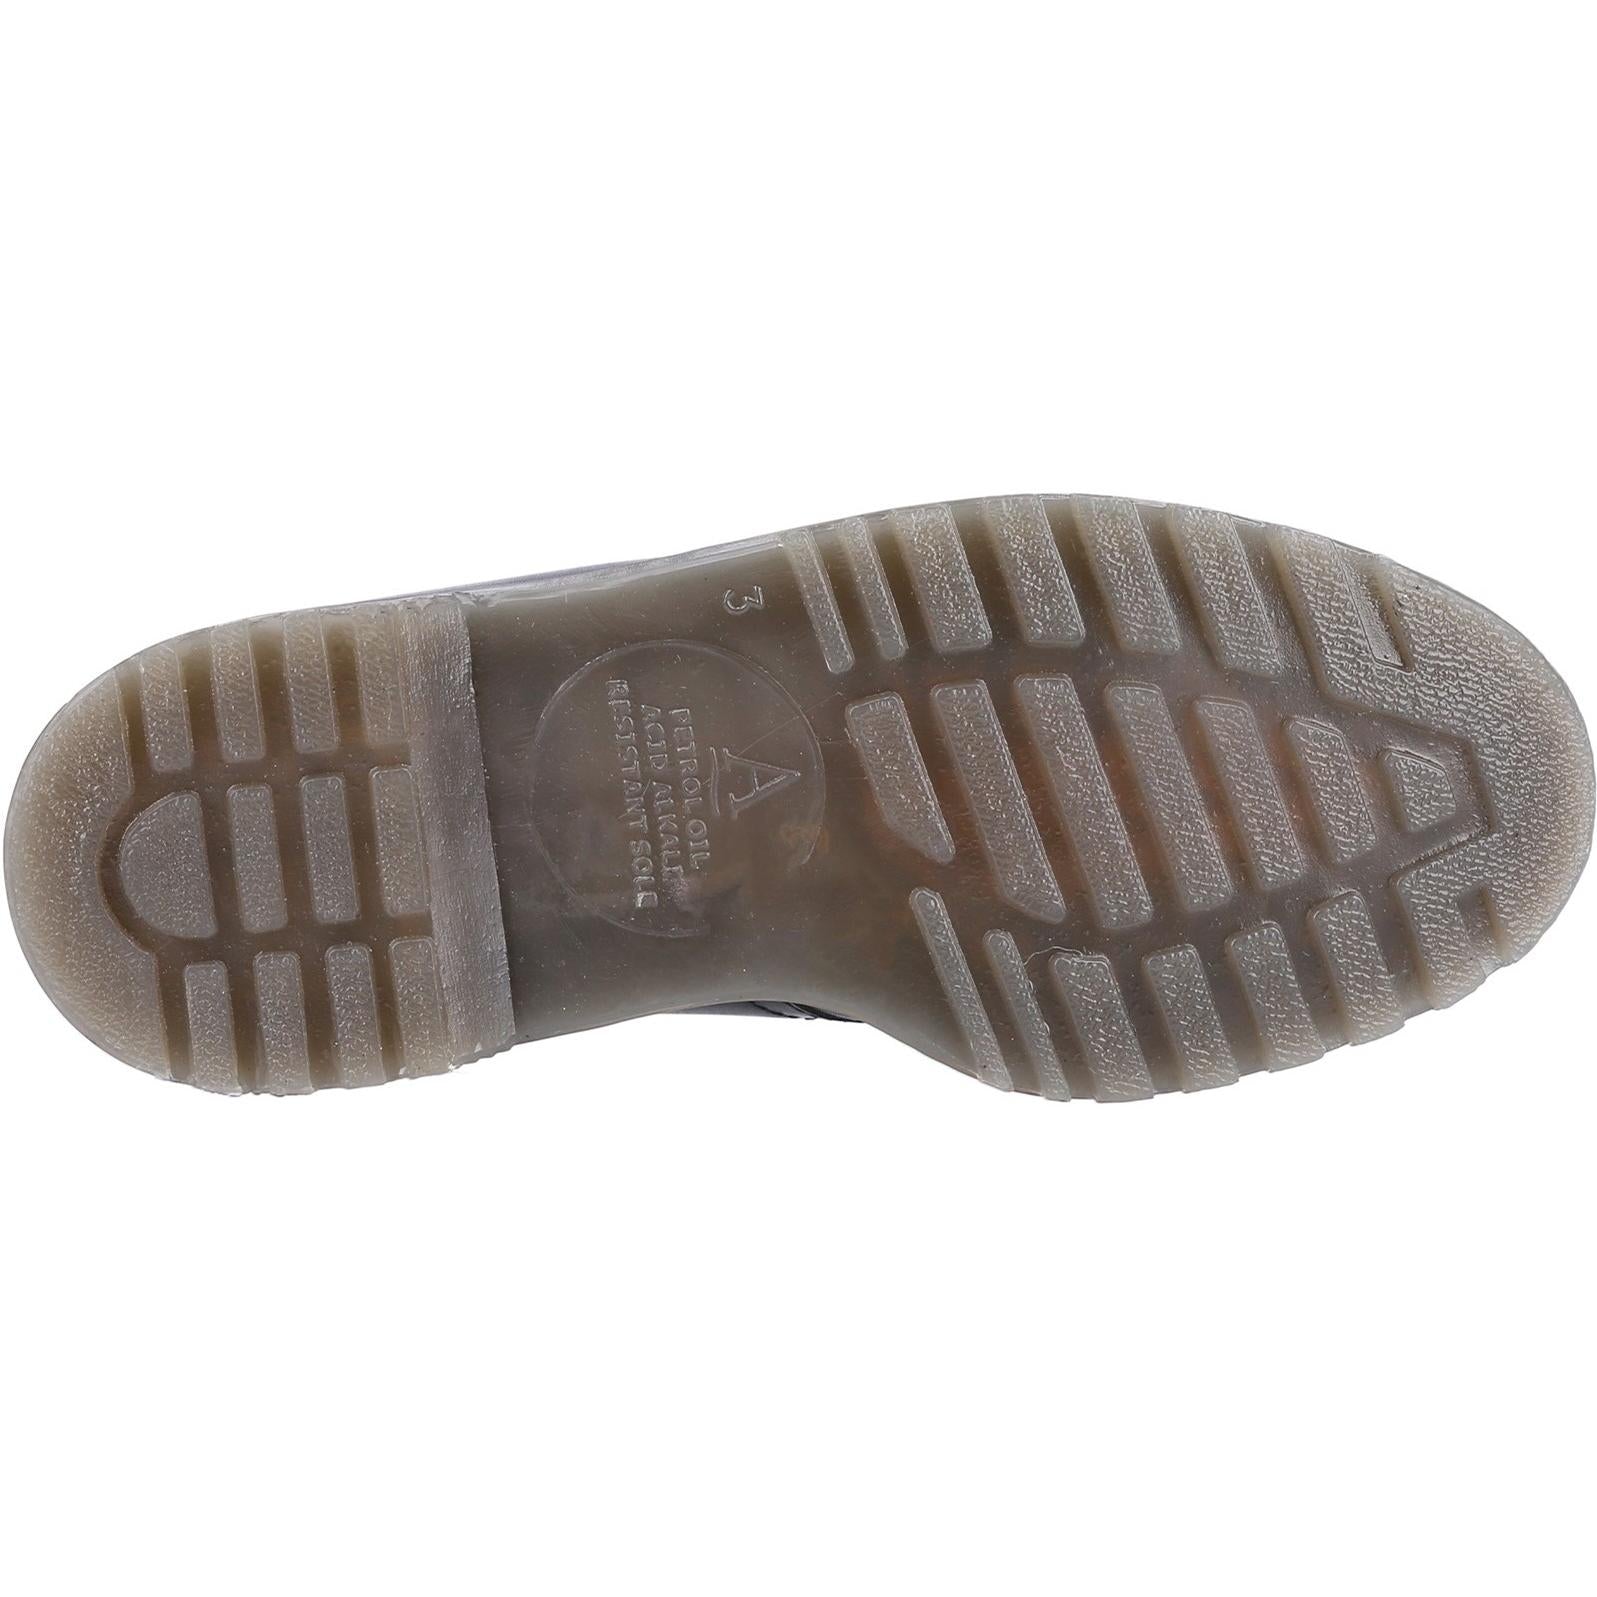 Amblers Aldershot Leather Gibson Shoe